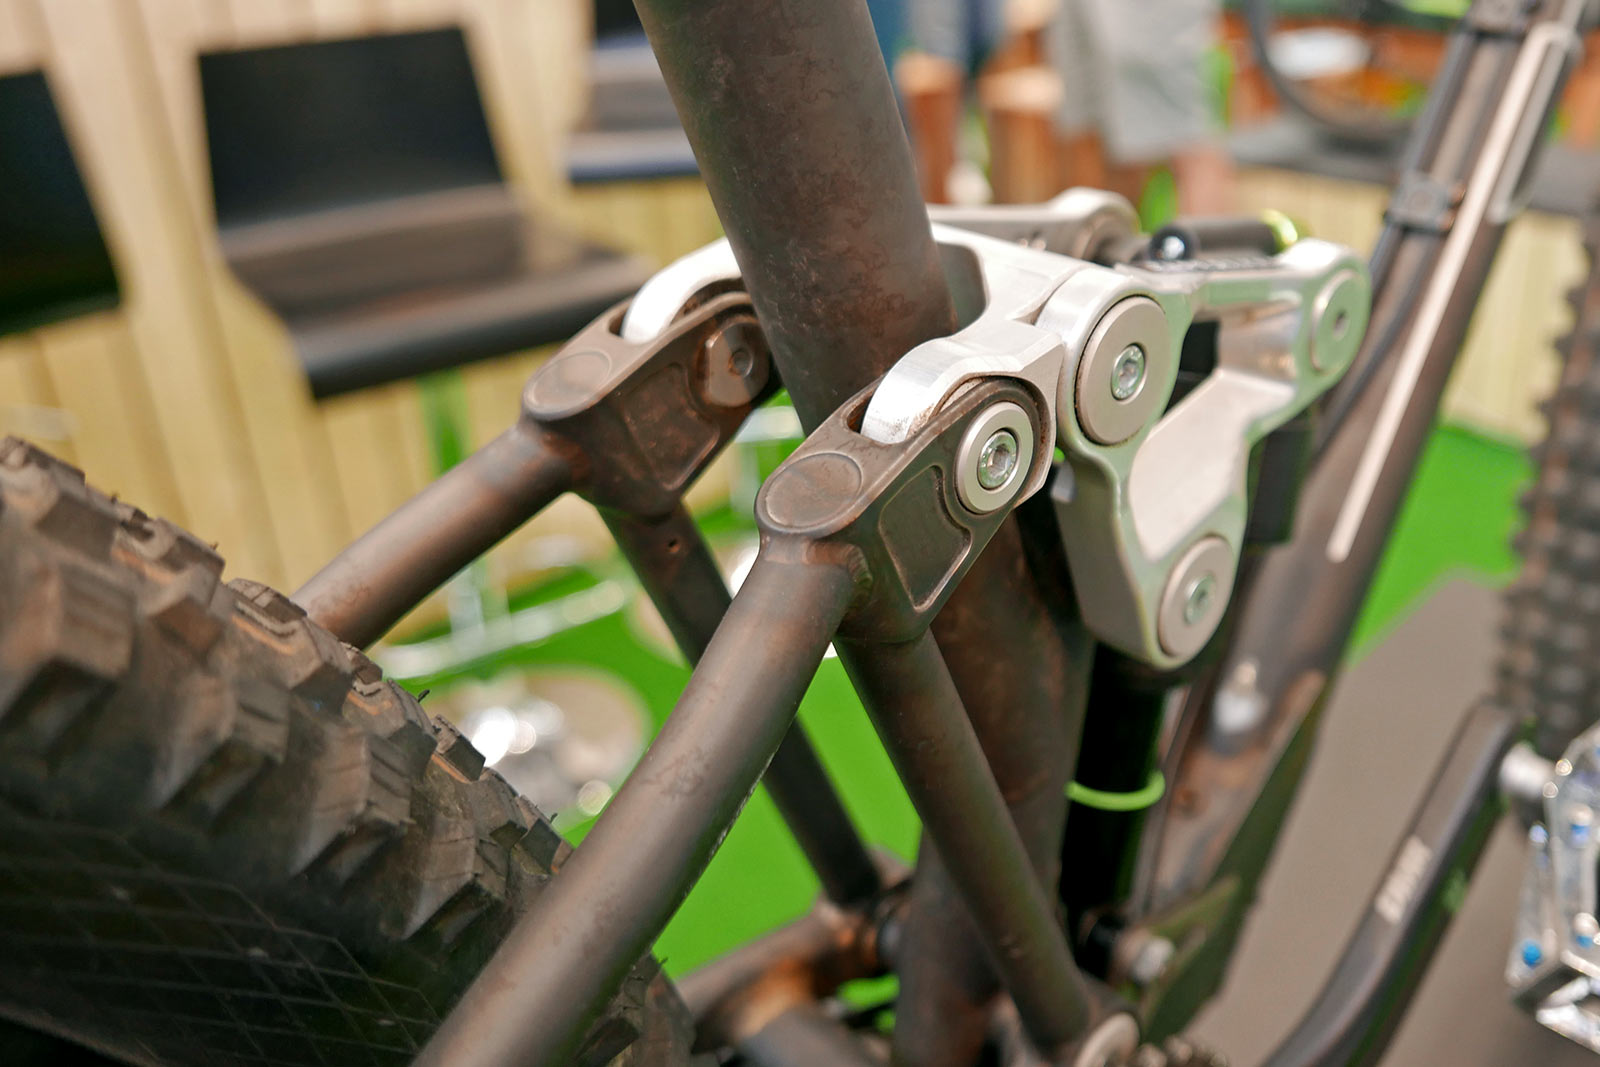 Sour Double Choc steel 143mm travel enduro bike prototype, big bearings